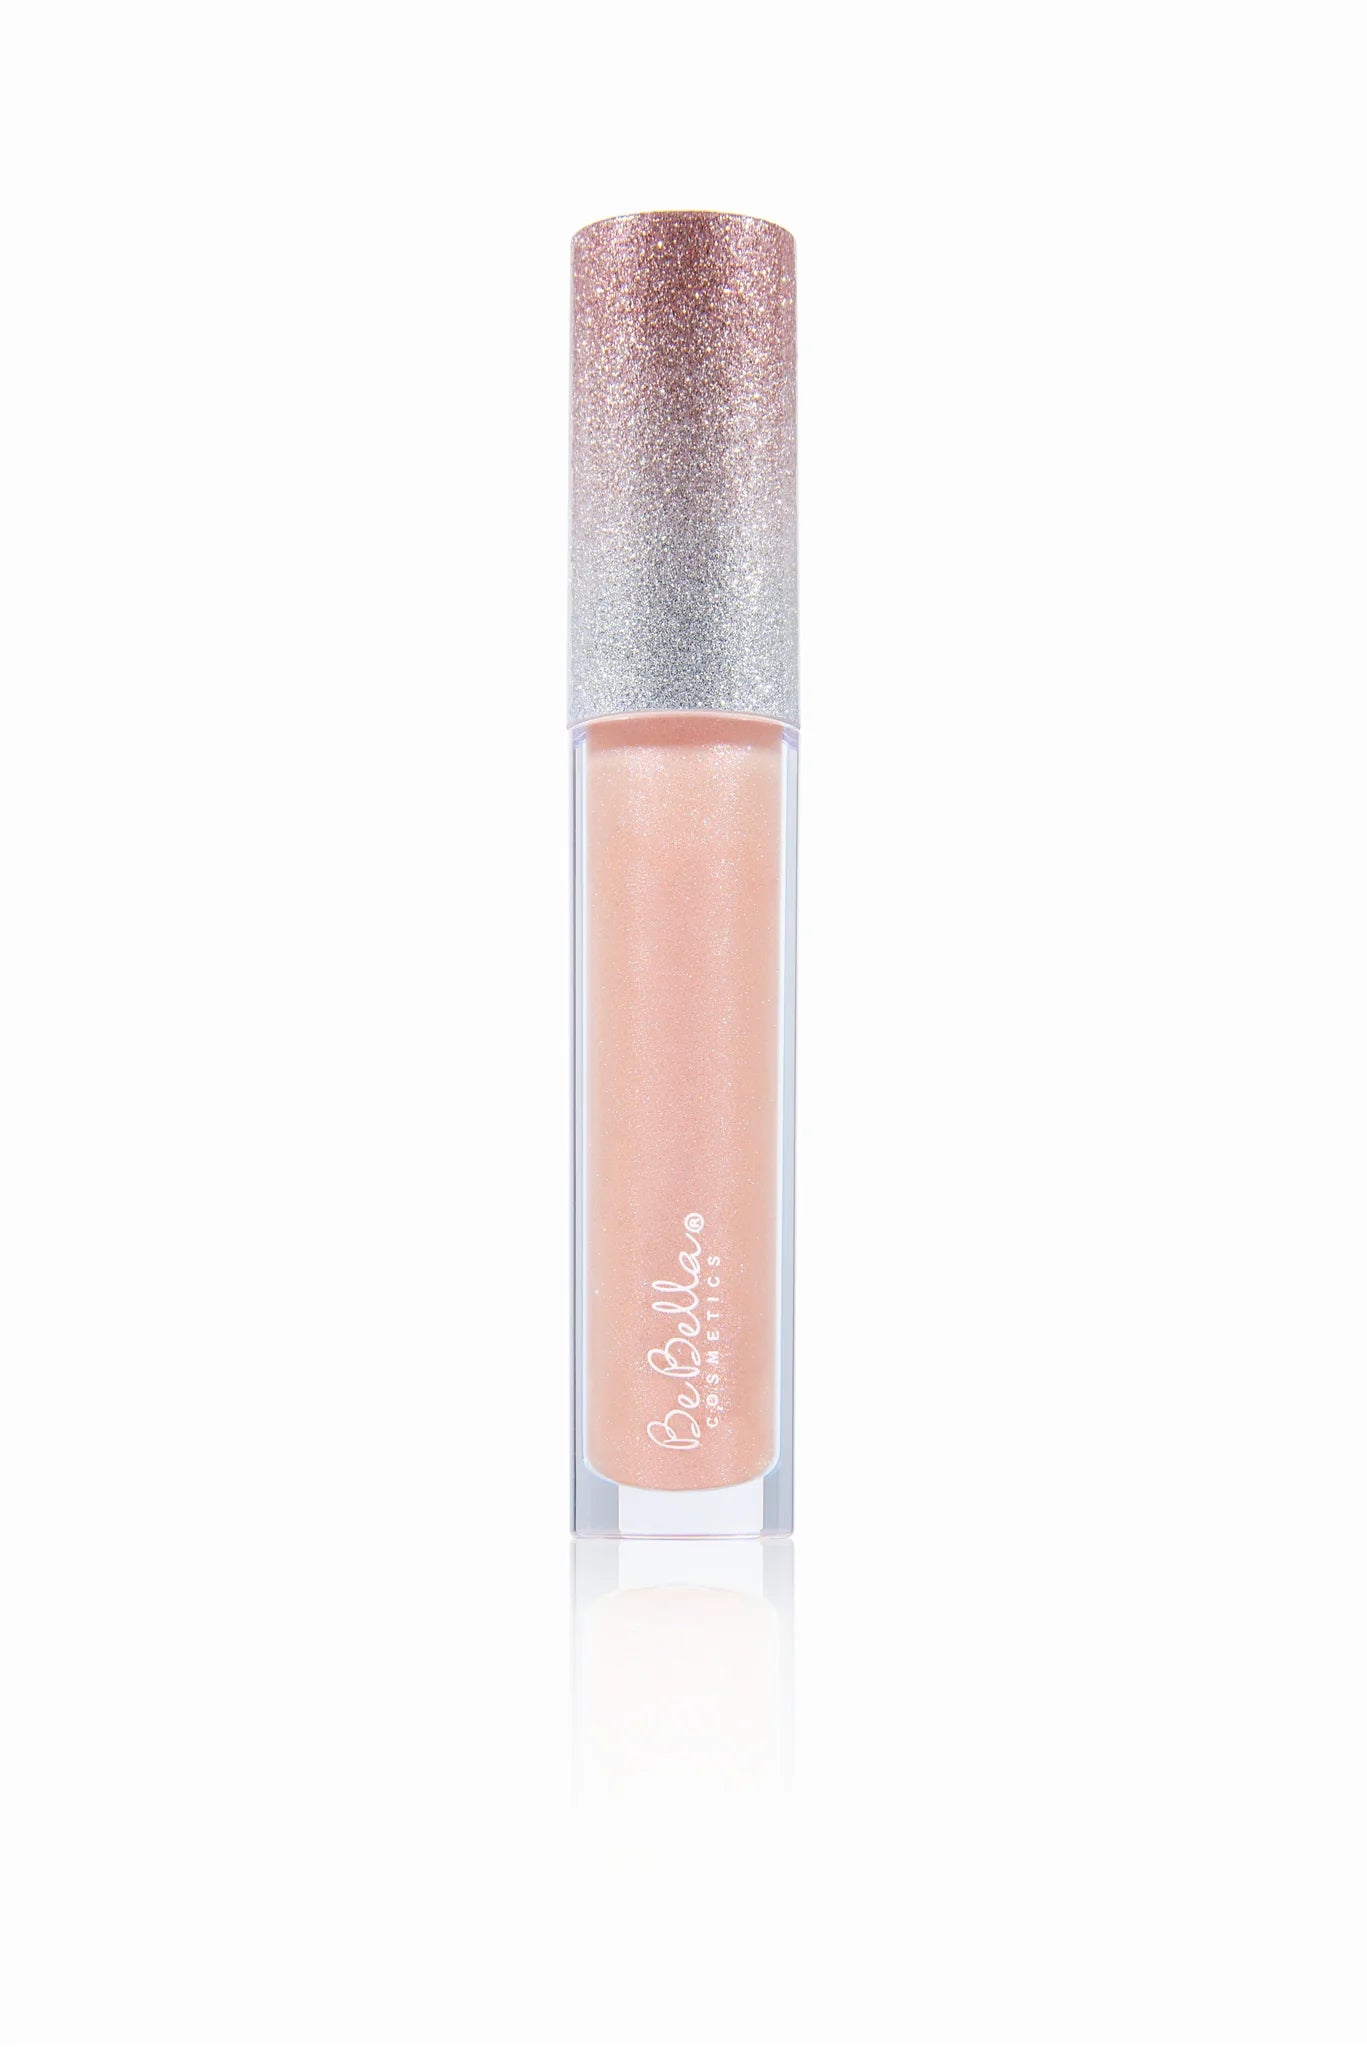 Sweet Encounter LS01- BeBella Luxe Lipgloss